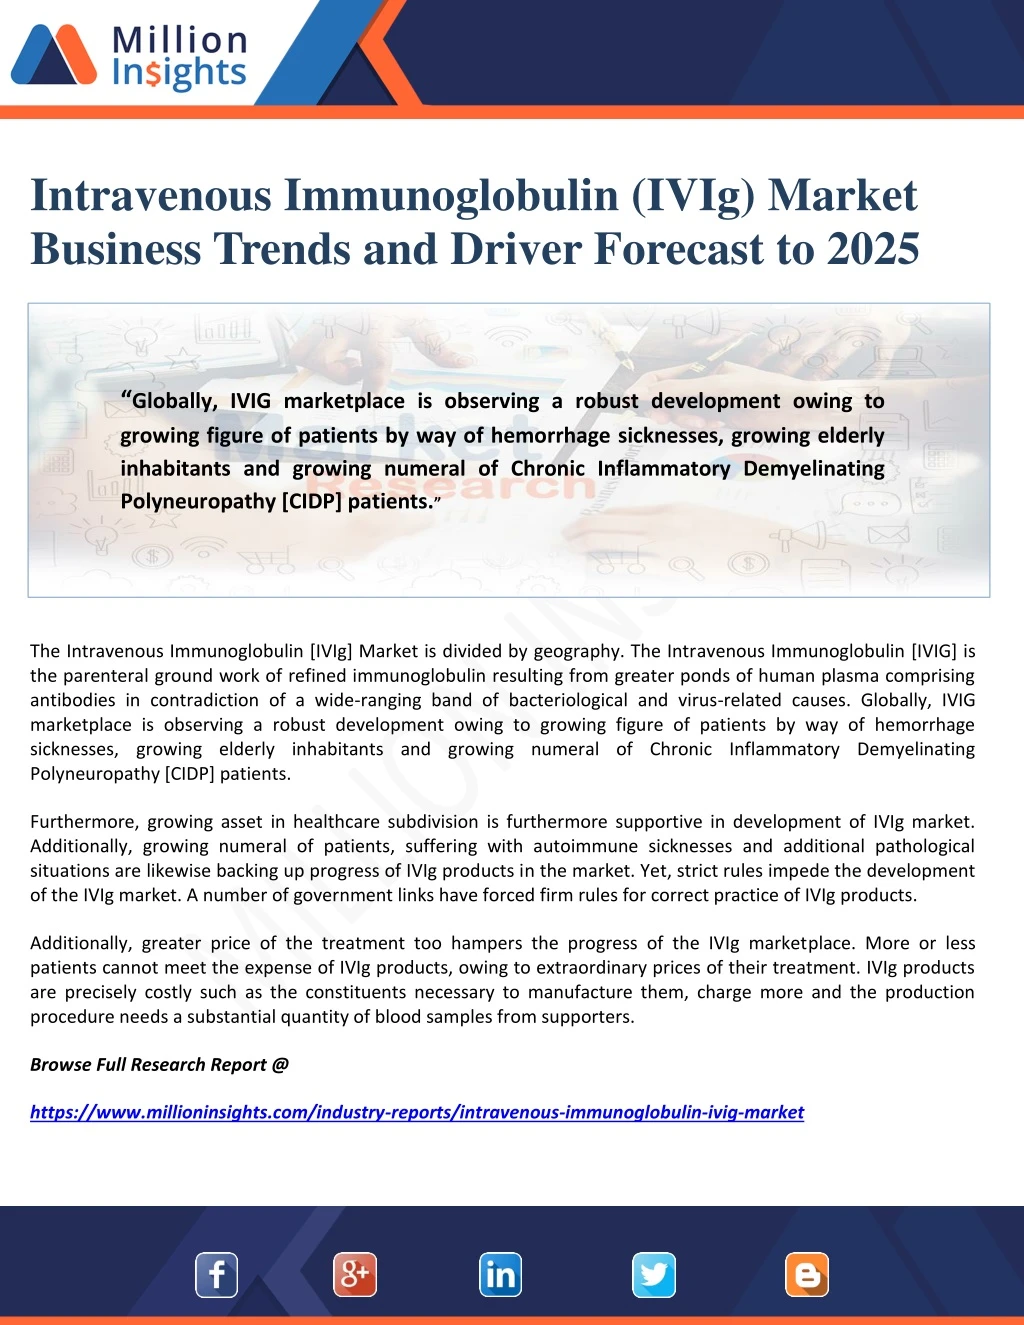 intravenous immunoglobulin ivig market business